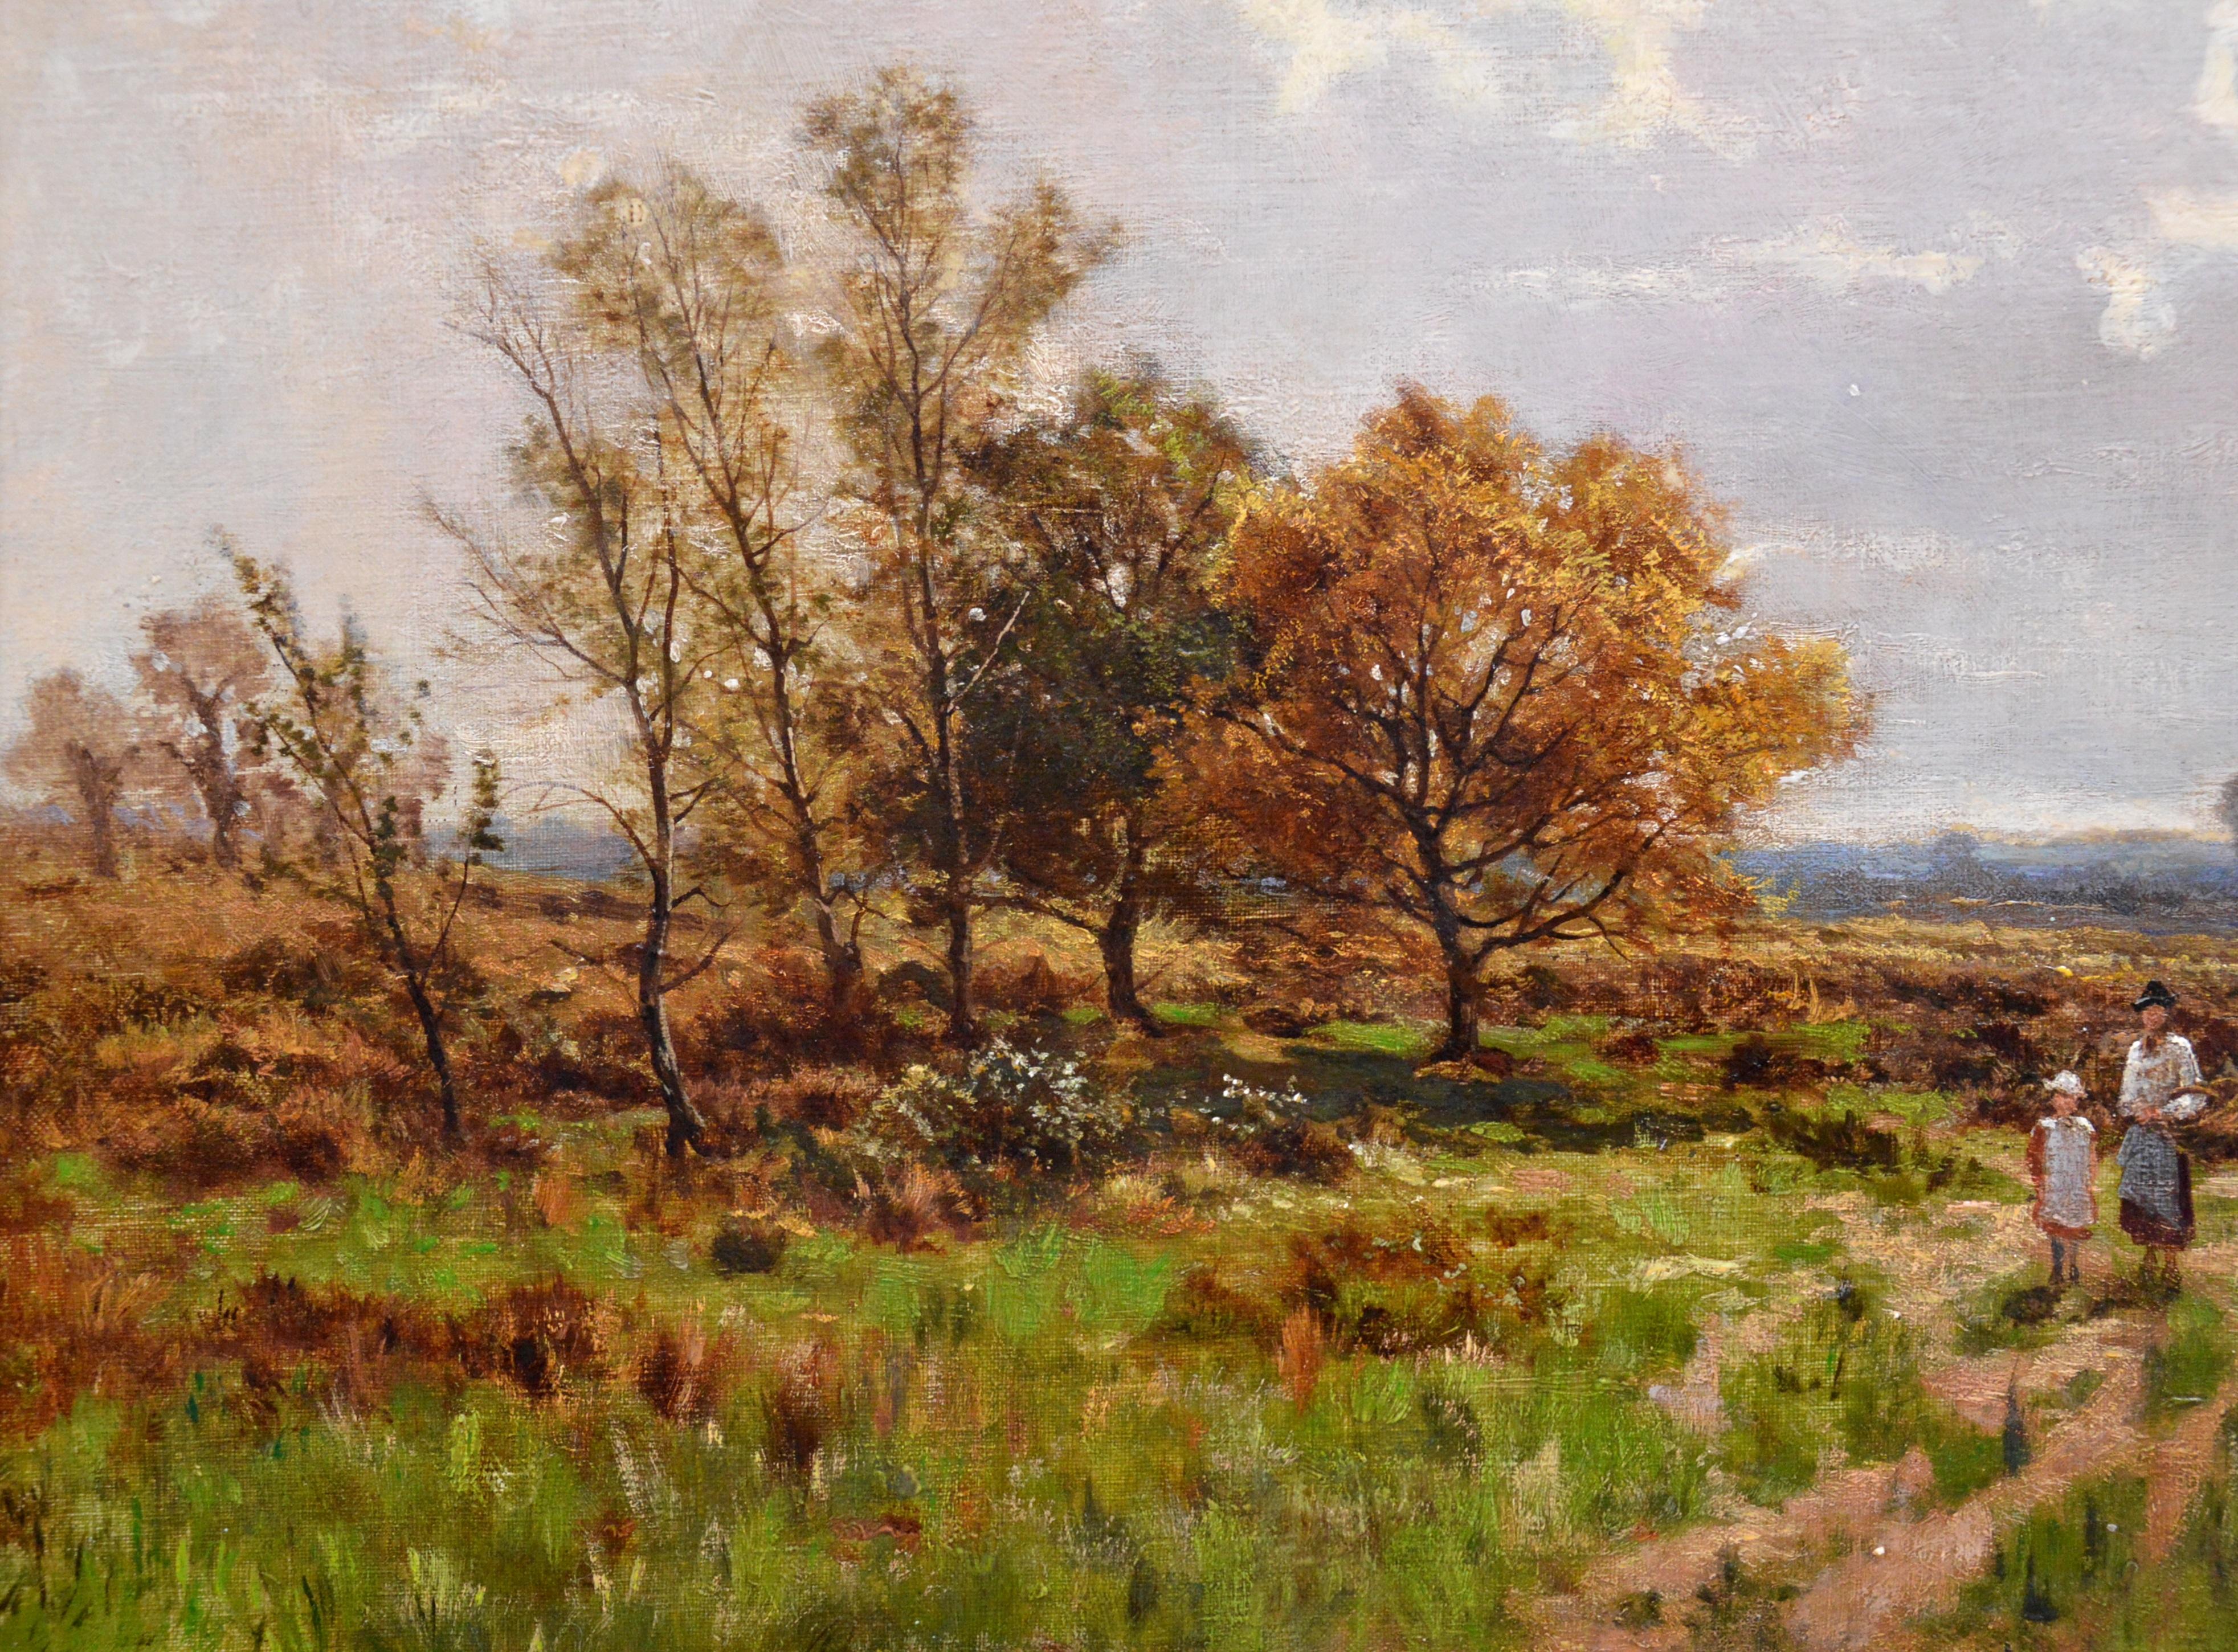 Near Stratford on Avon - 19th Century English Landscape Oil Painting  3